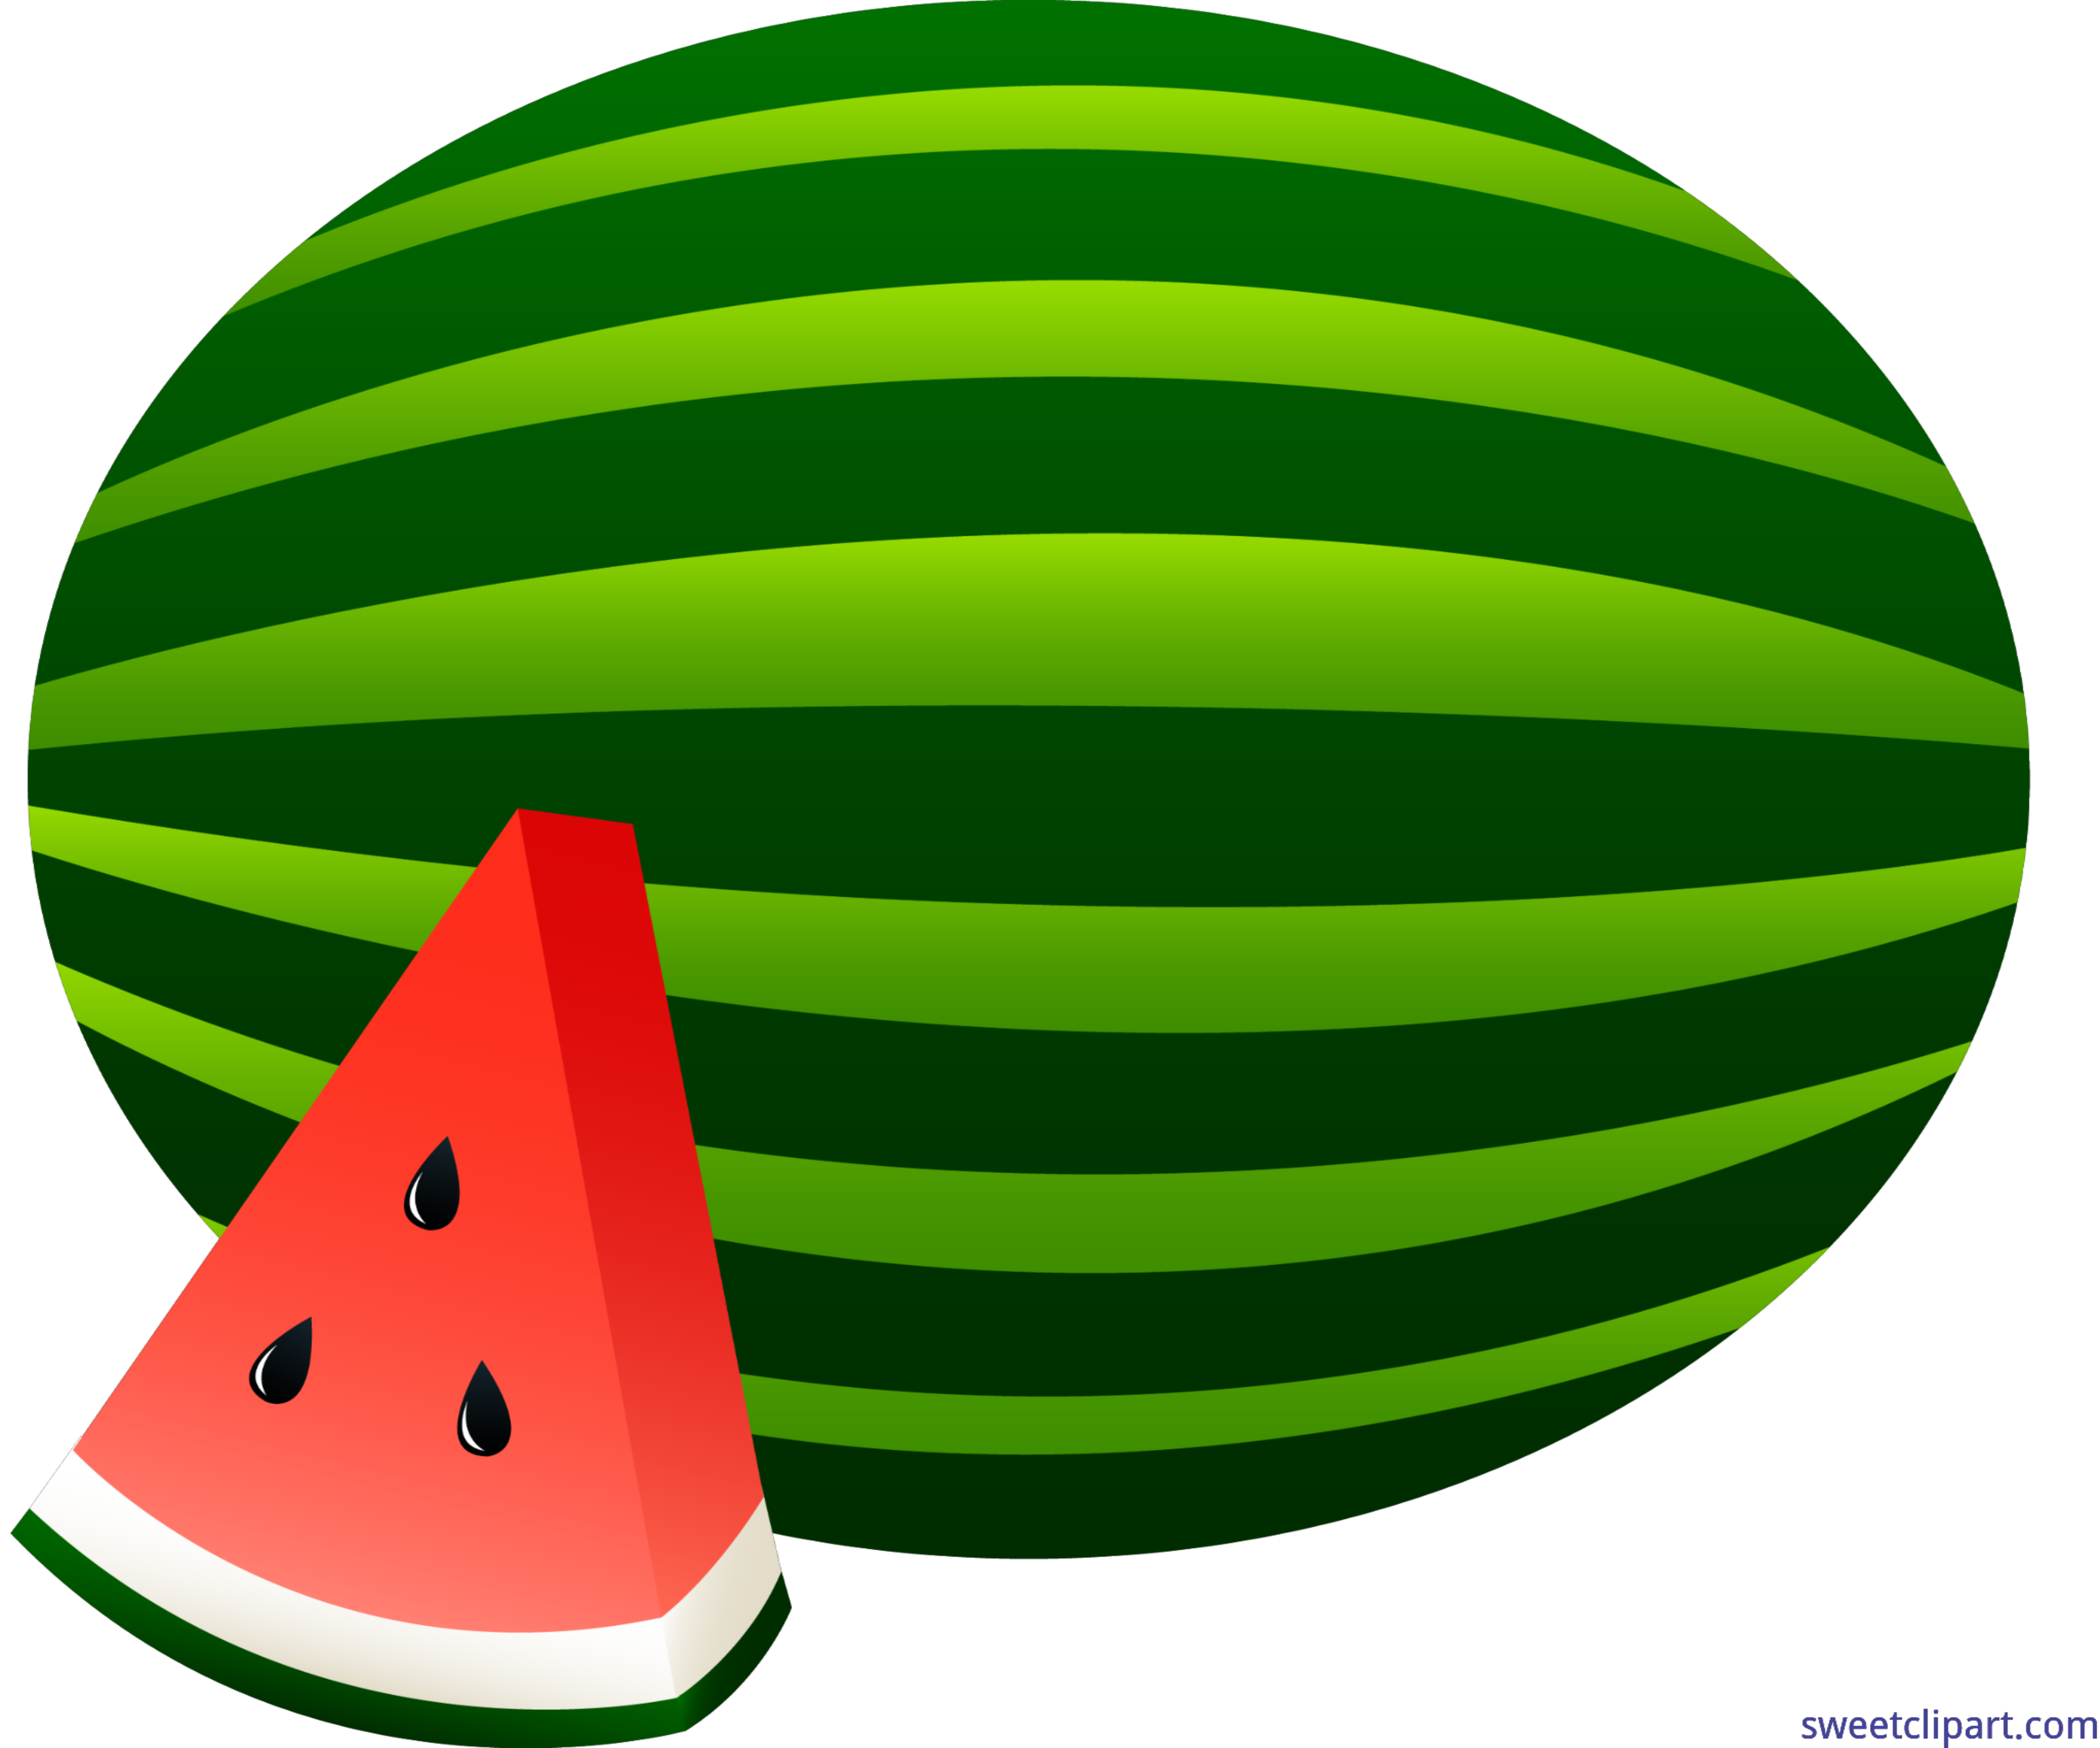 Watermelon whole slice.